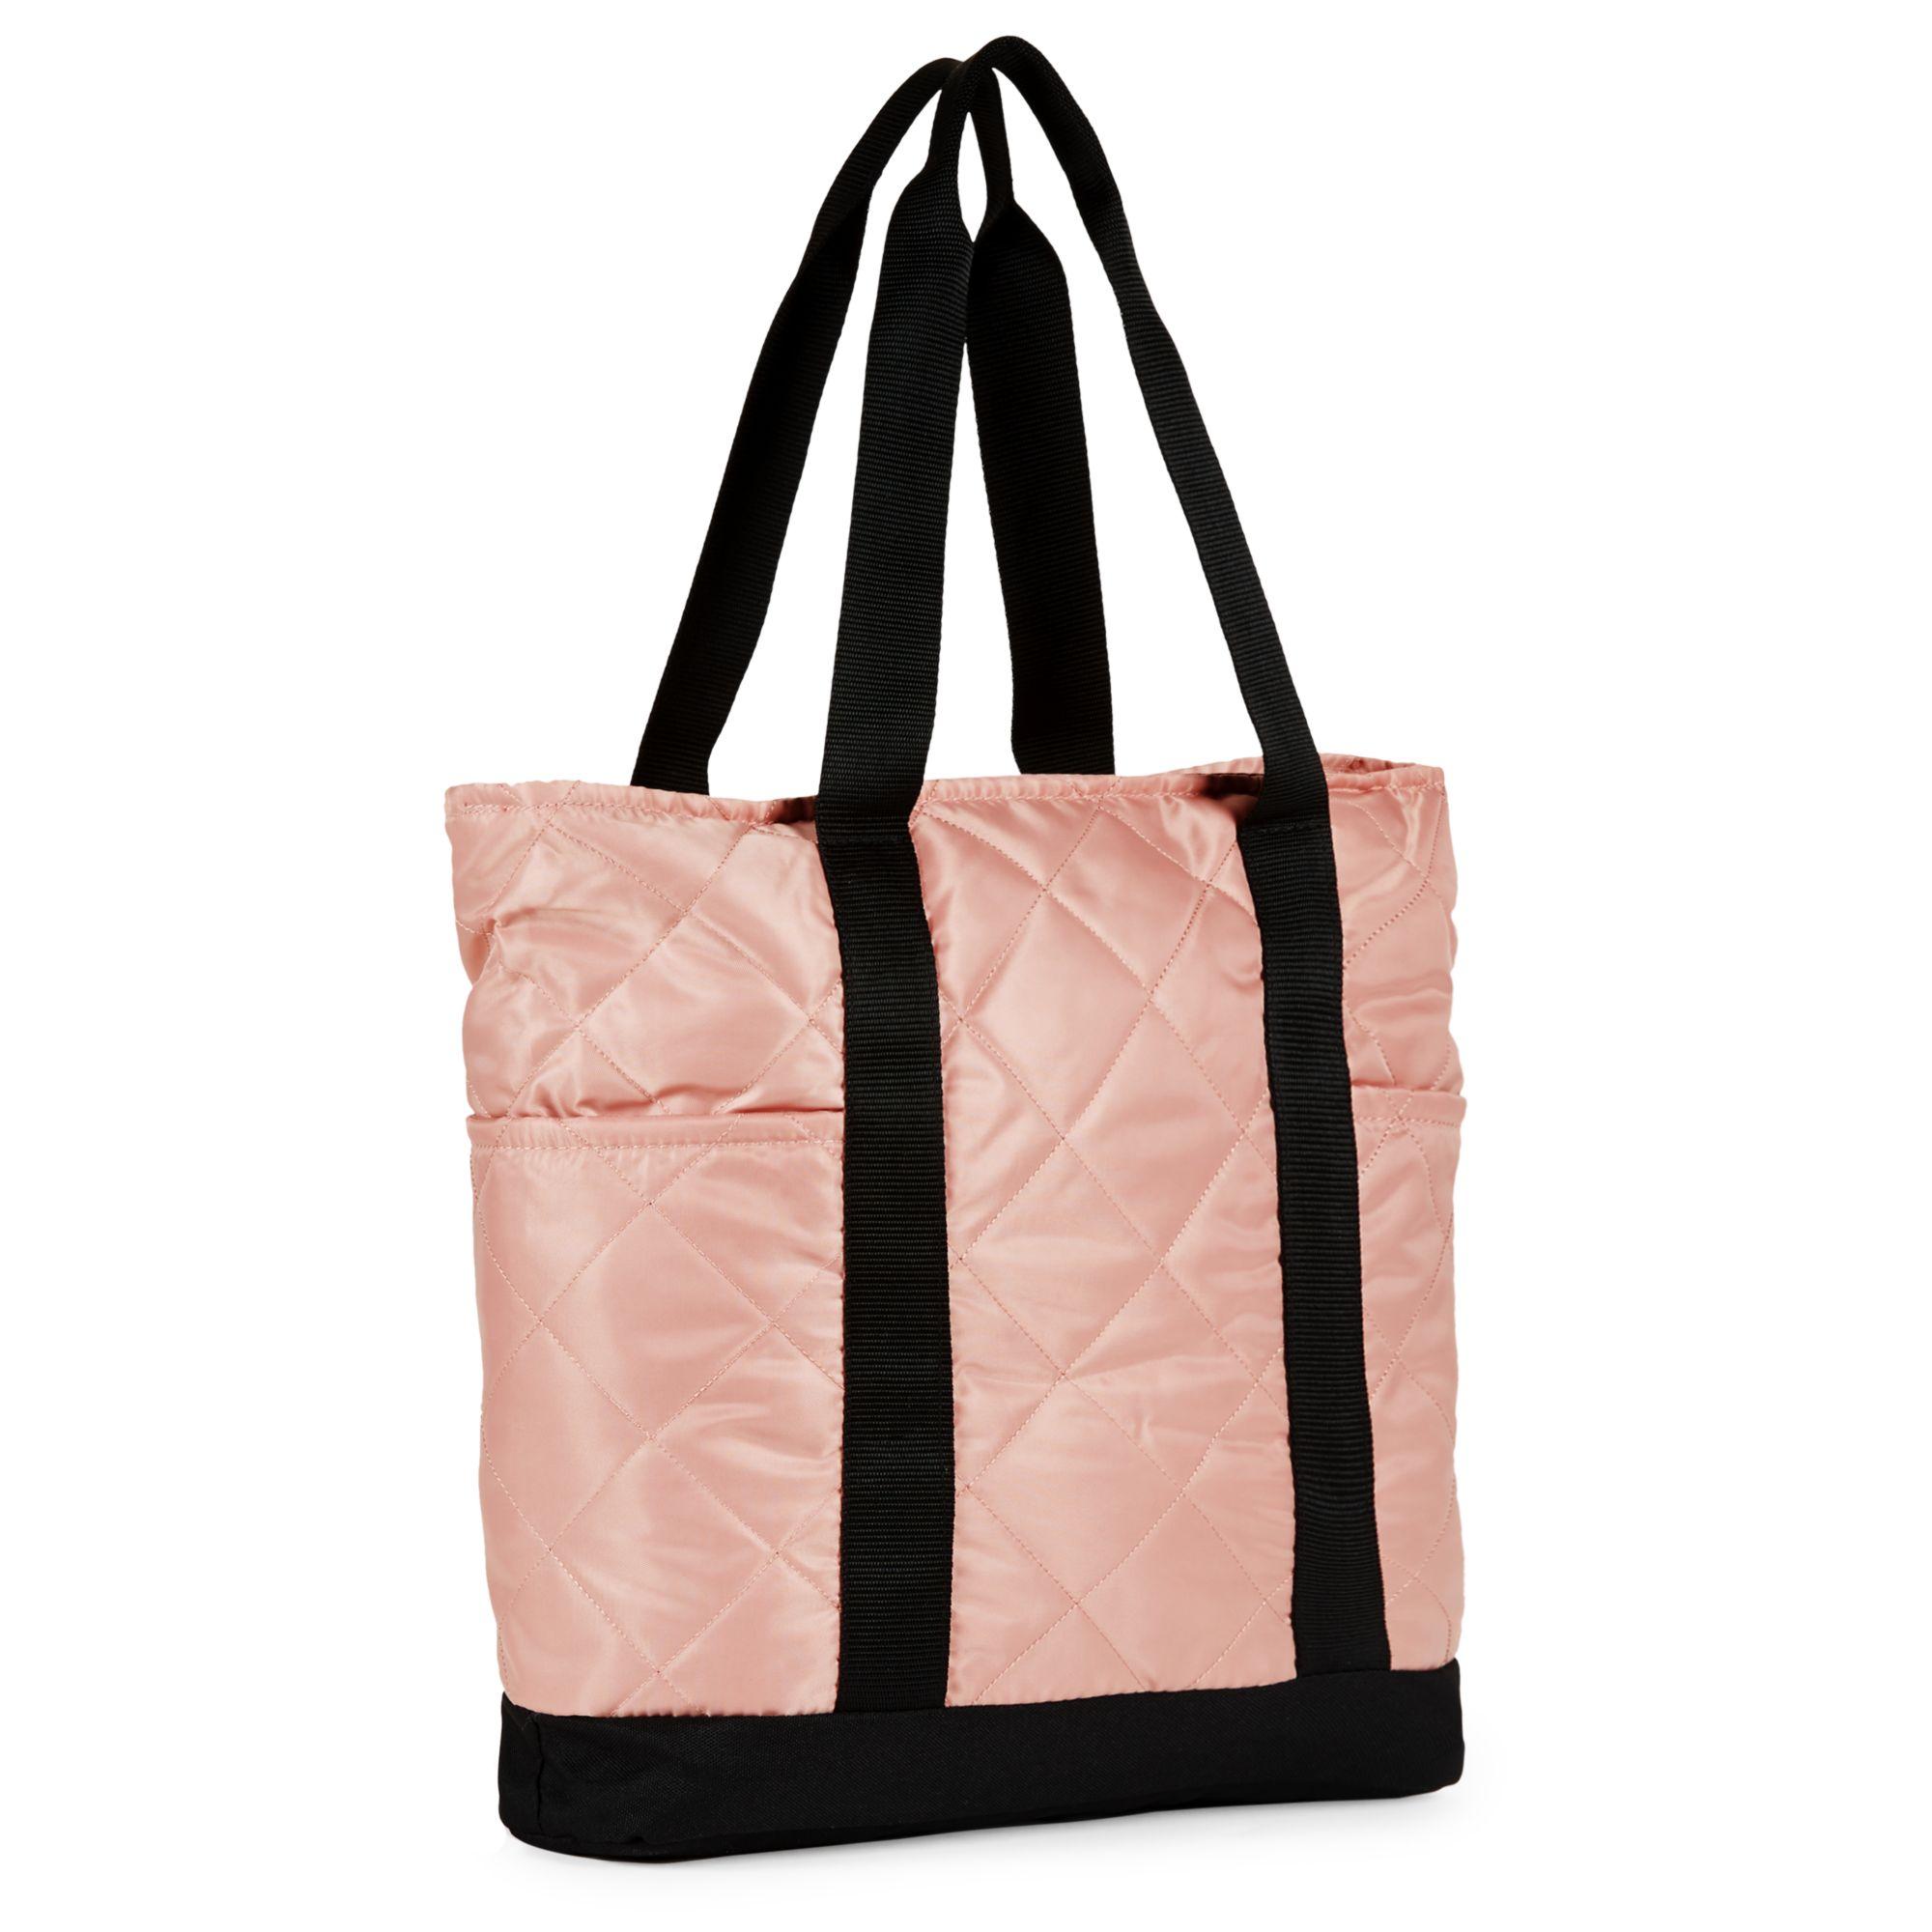 PUMA Synthetic Orbital Tote Bag in Pink Black (Pink) | Lyst